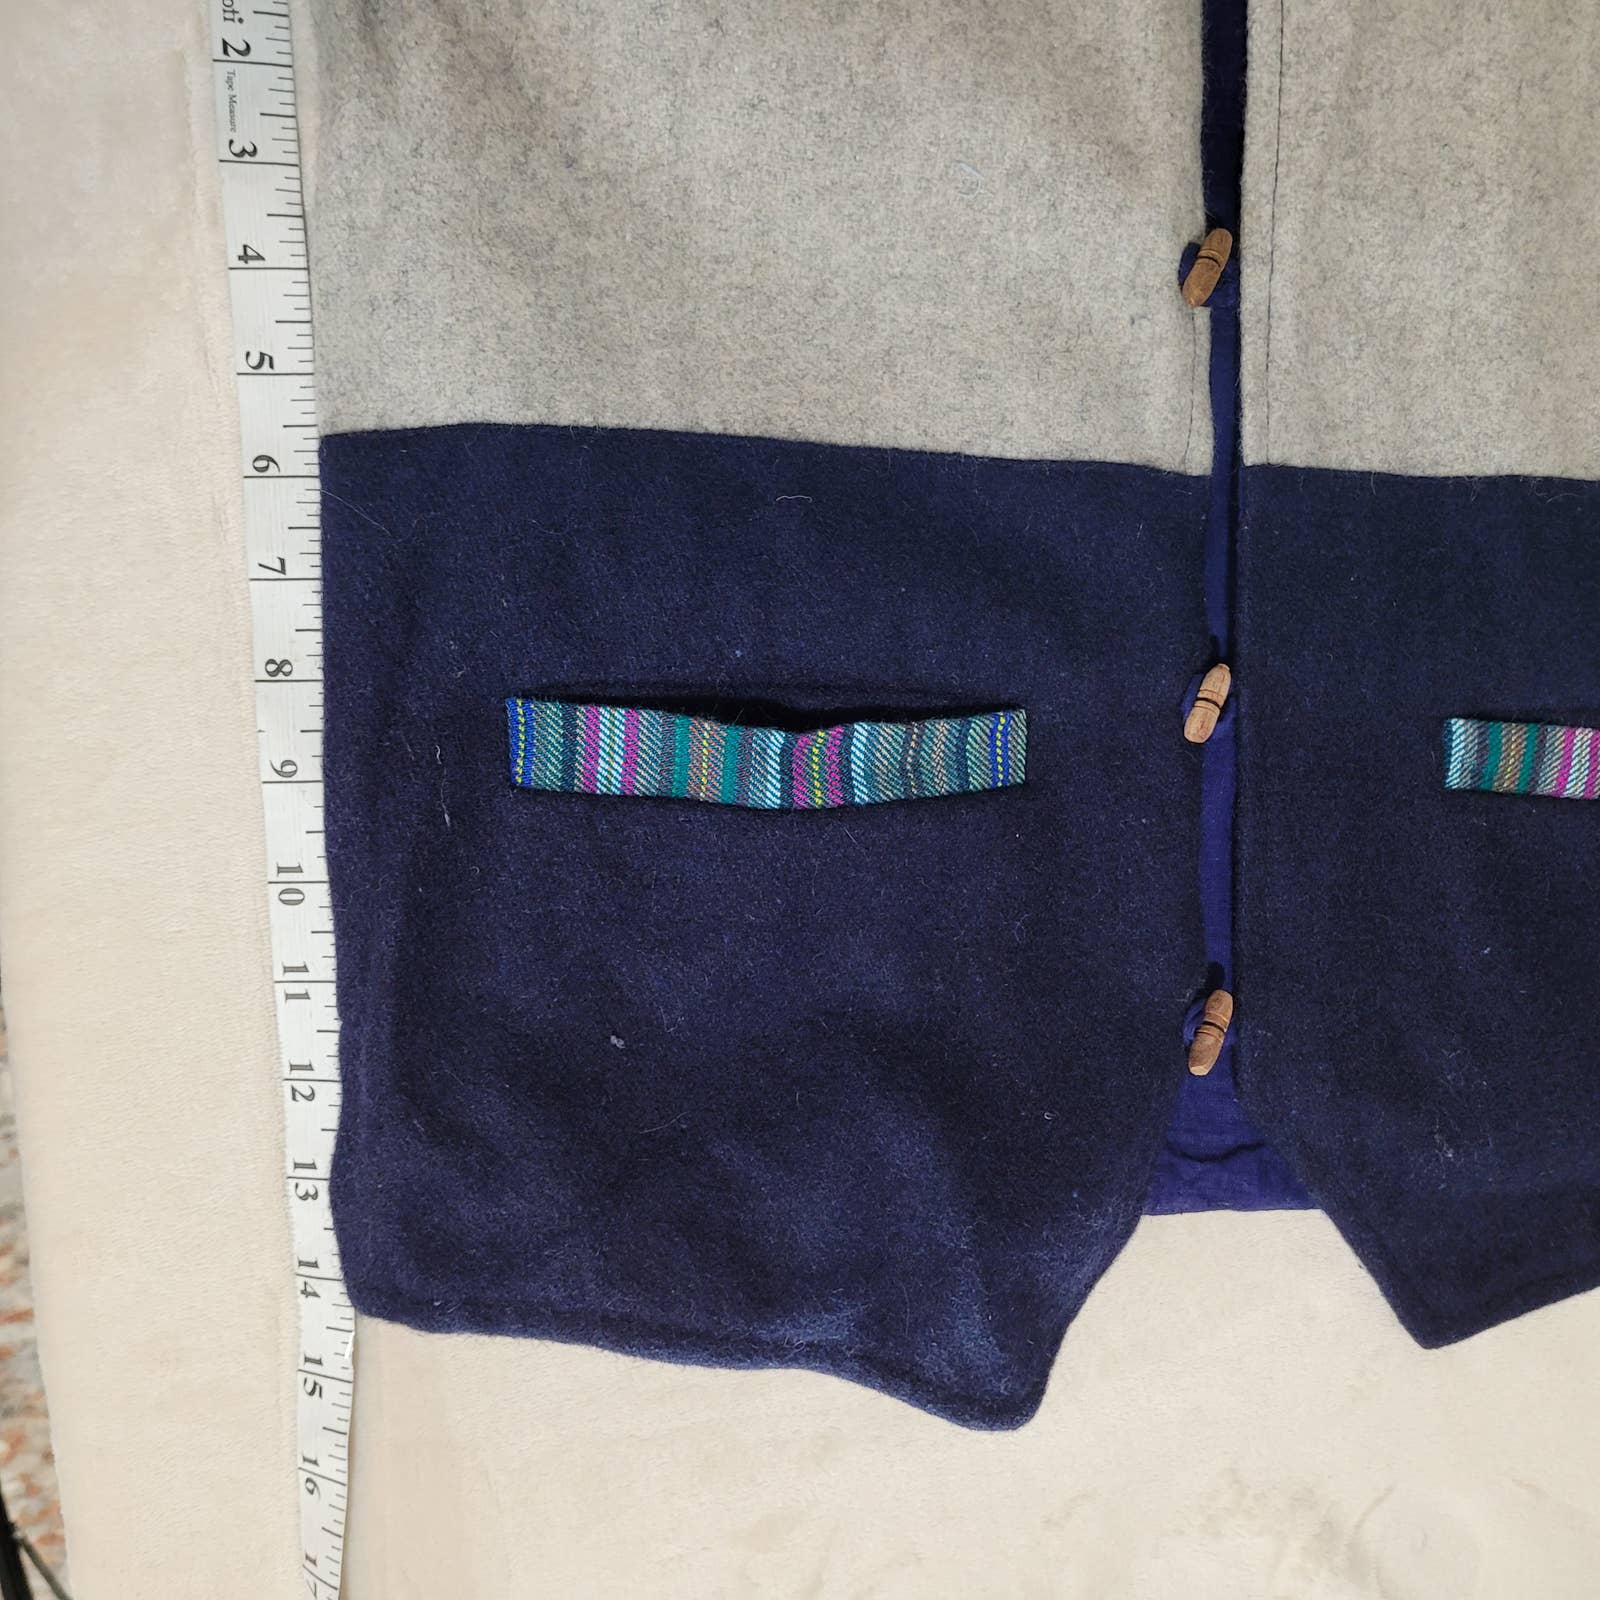 Vintage Wool Patchwork Vest - Size MediumMarkita's ClosetUnbranded